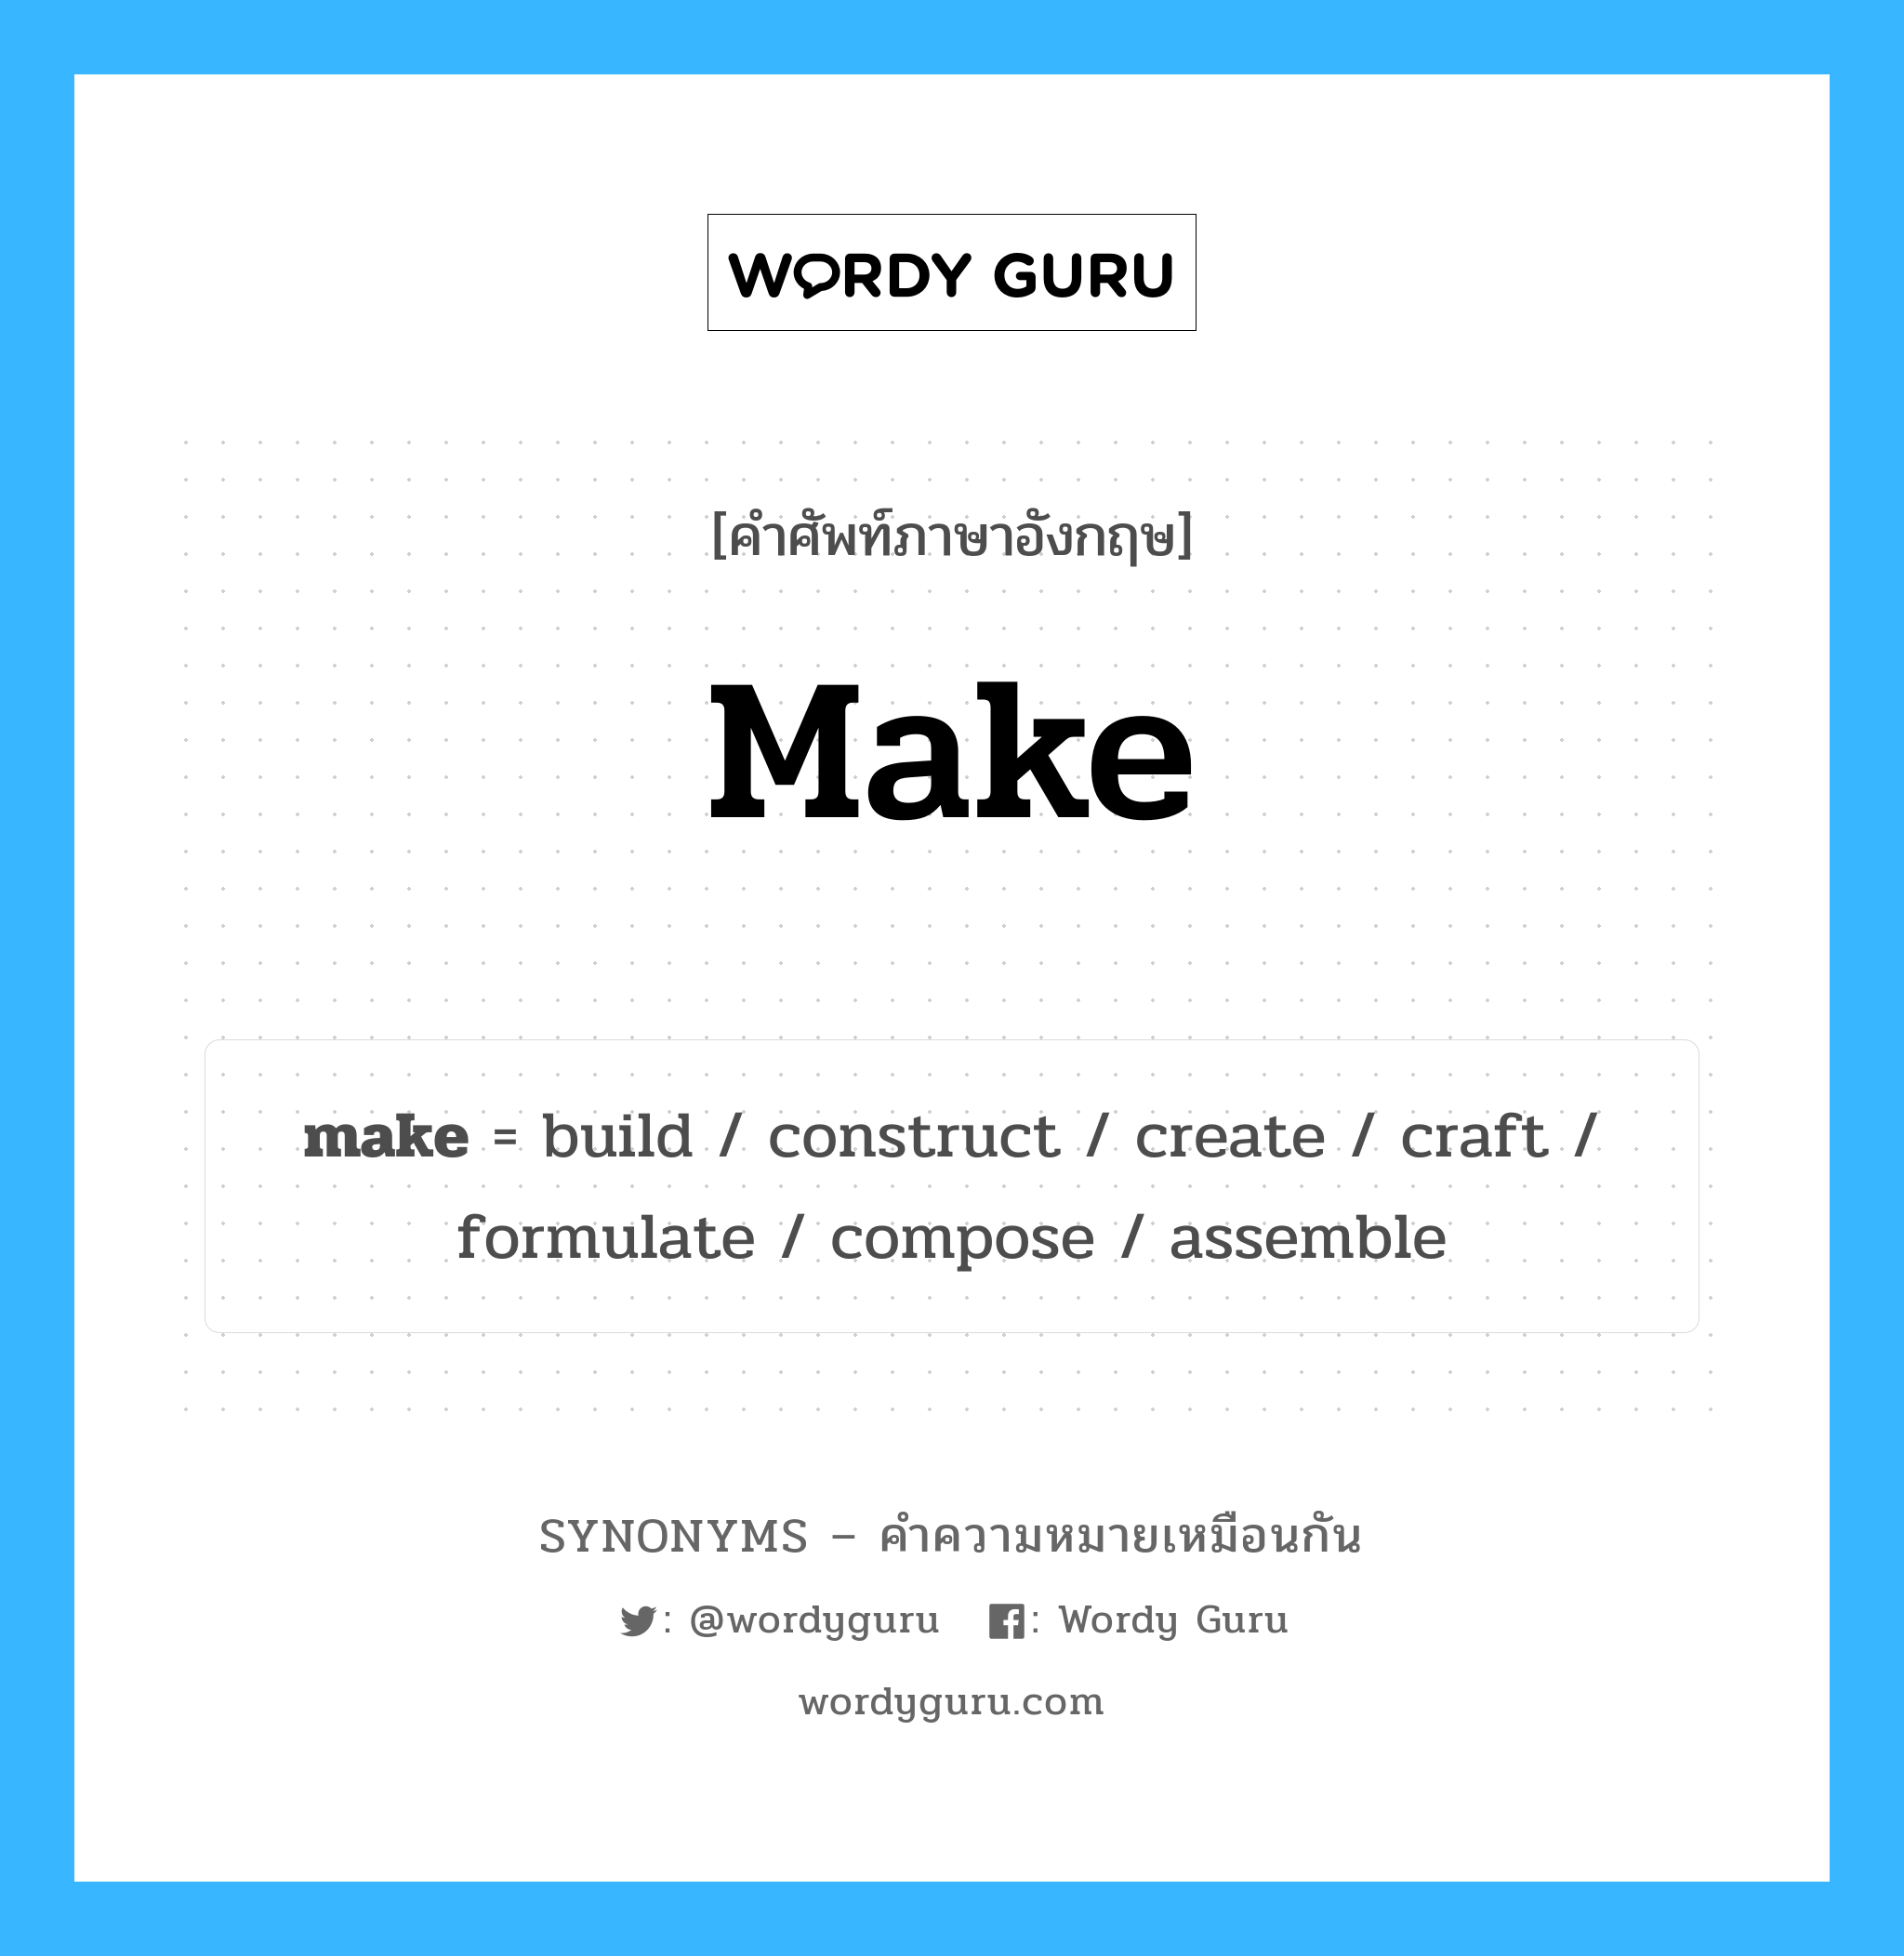 craft เป็นหนึ่งใน make และมีคำอื่น ๆ อีกดังนี้, คำศัพท์ภาษาอังกฤษ craft ความหมายคล้ายกันกับ make แปลว่า งานฝีมือ หมวด make